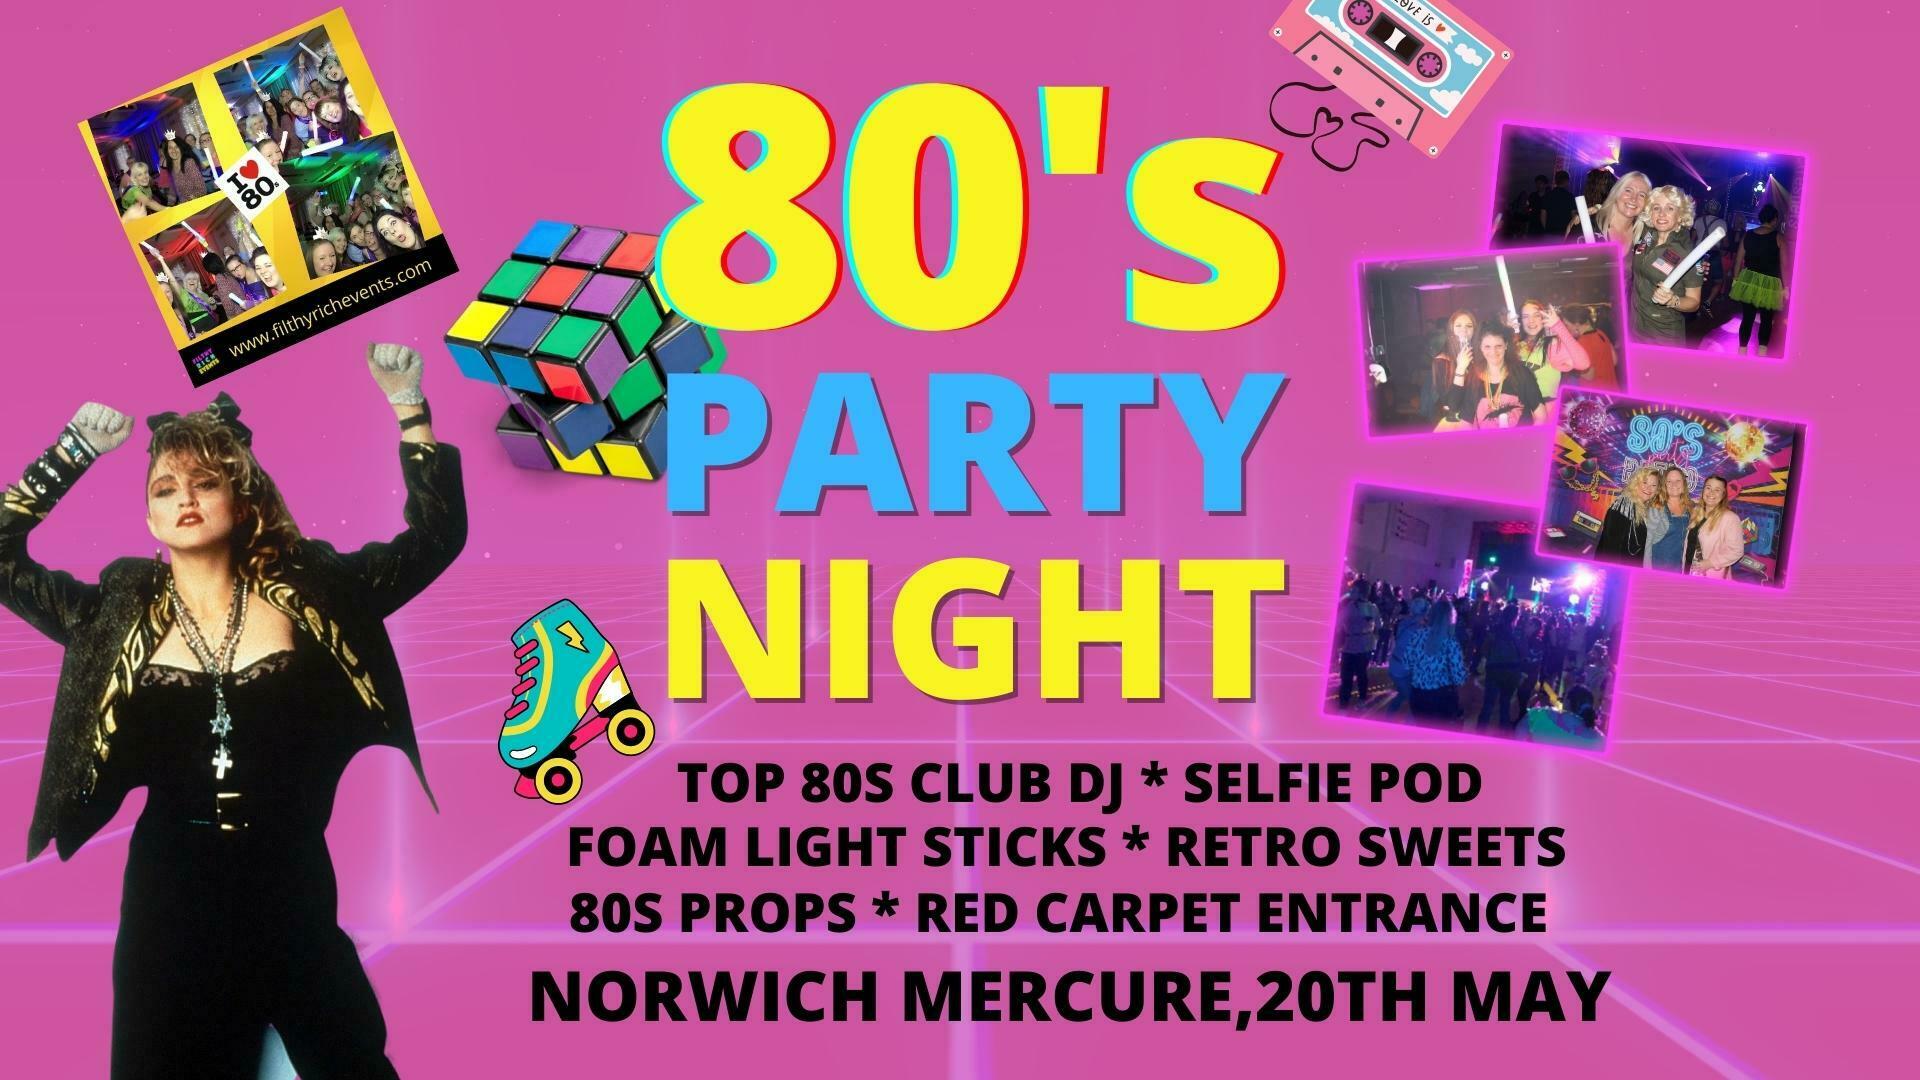 Tropicana Nights - 80s Party Night Tickets